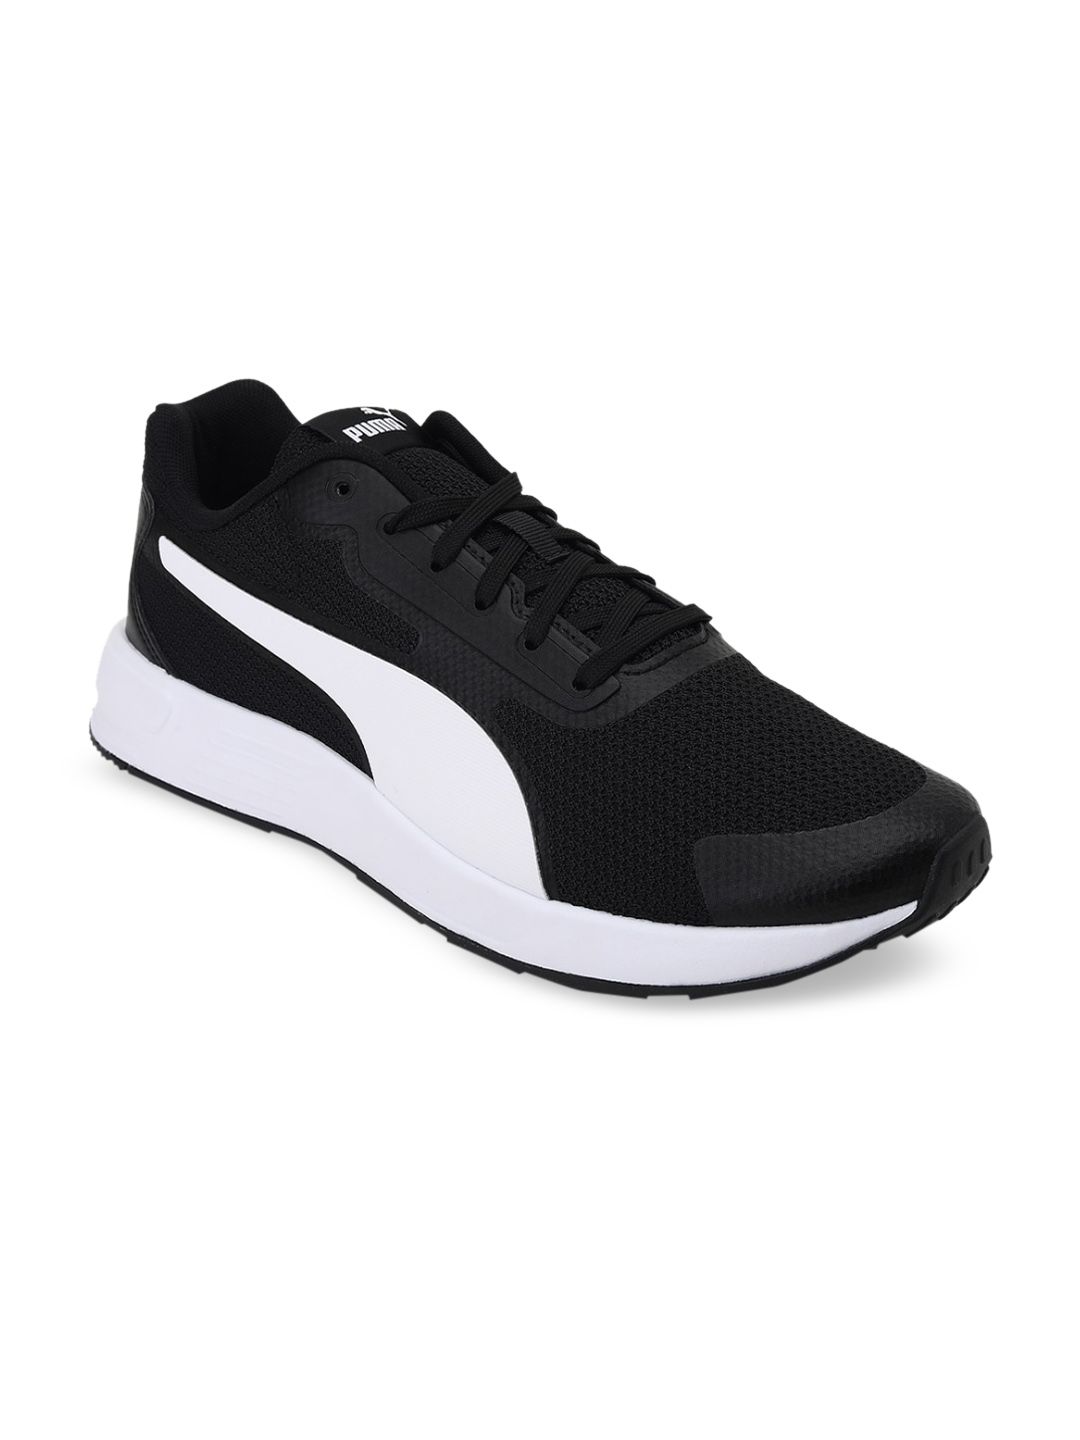 Puma Unisex Black & White Colourblocked Sneakers Price in India